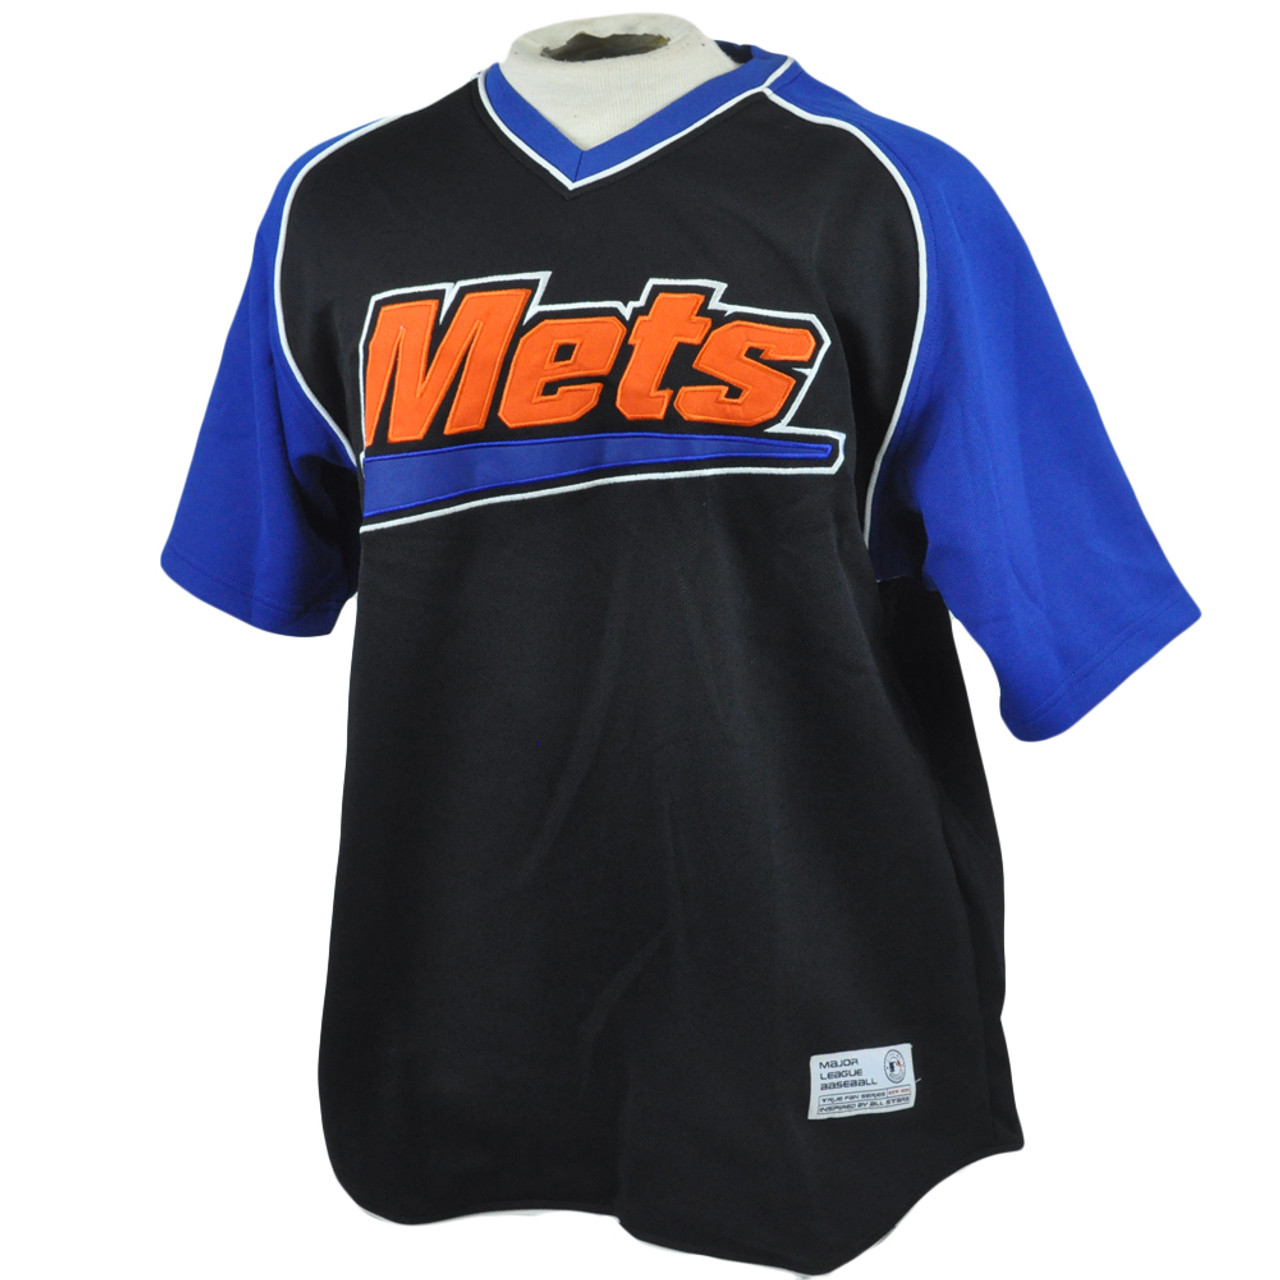 MLB Baseball Jersey Shirt Authentic Licensed True Fan New York